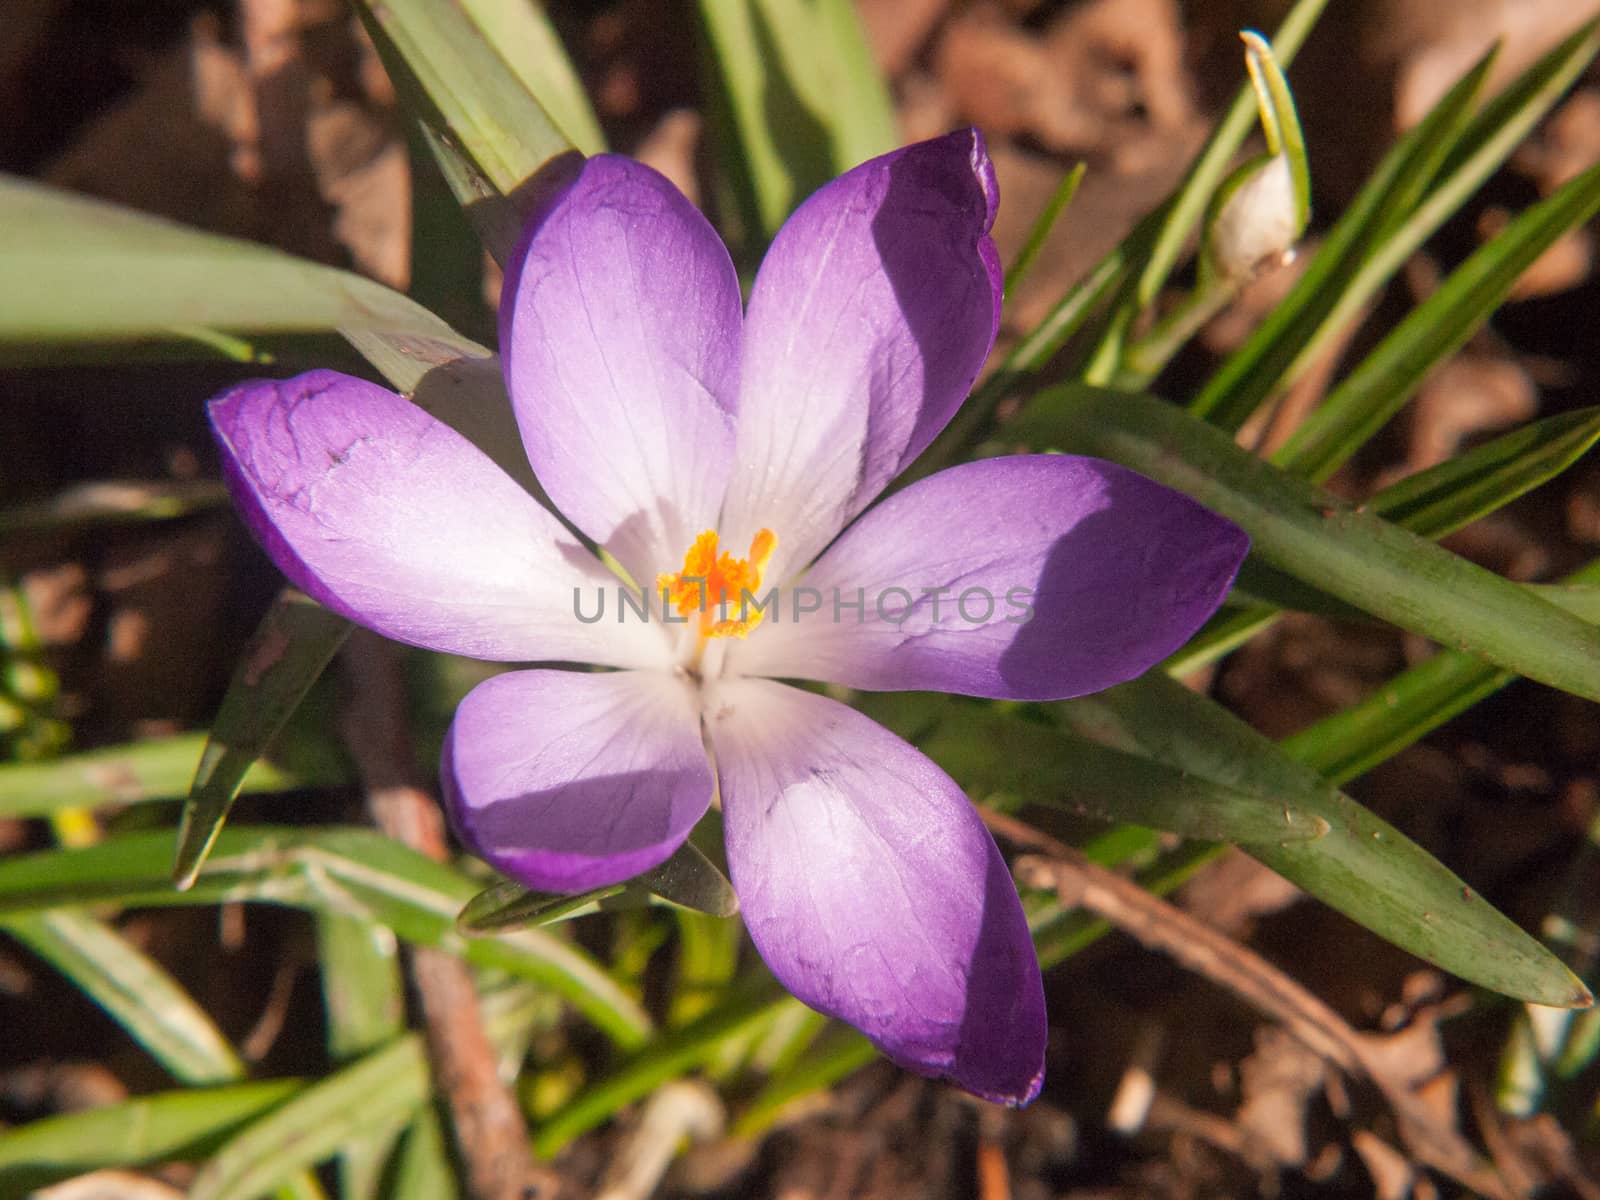 beautiful purple and orange crocus flower forest floor spring close up macro detail inside; essex; england; uk